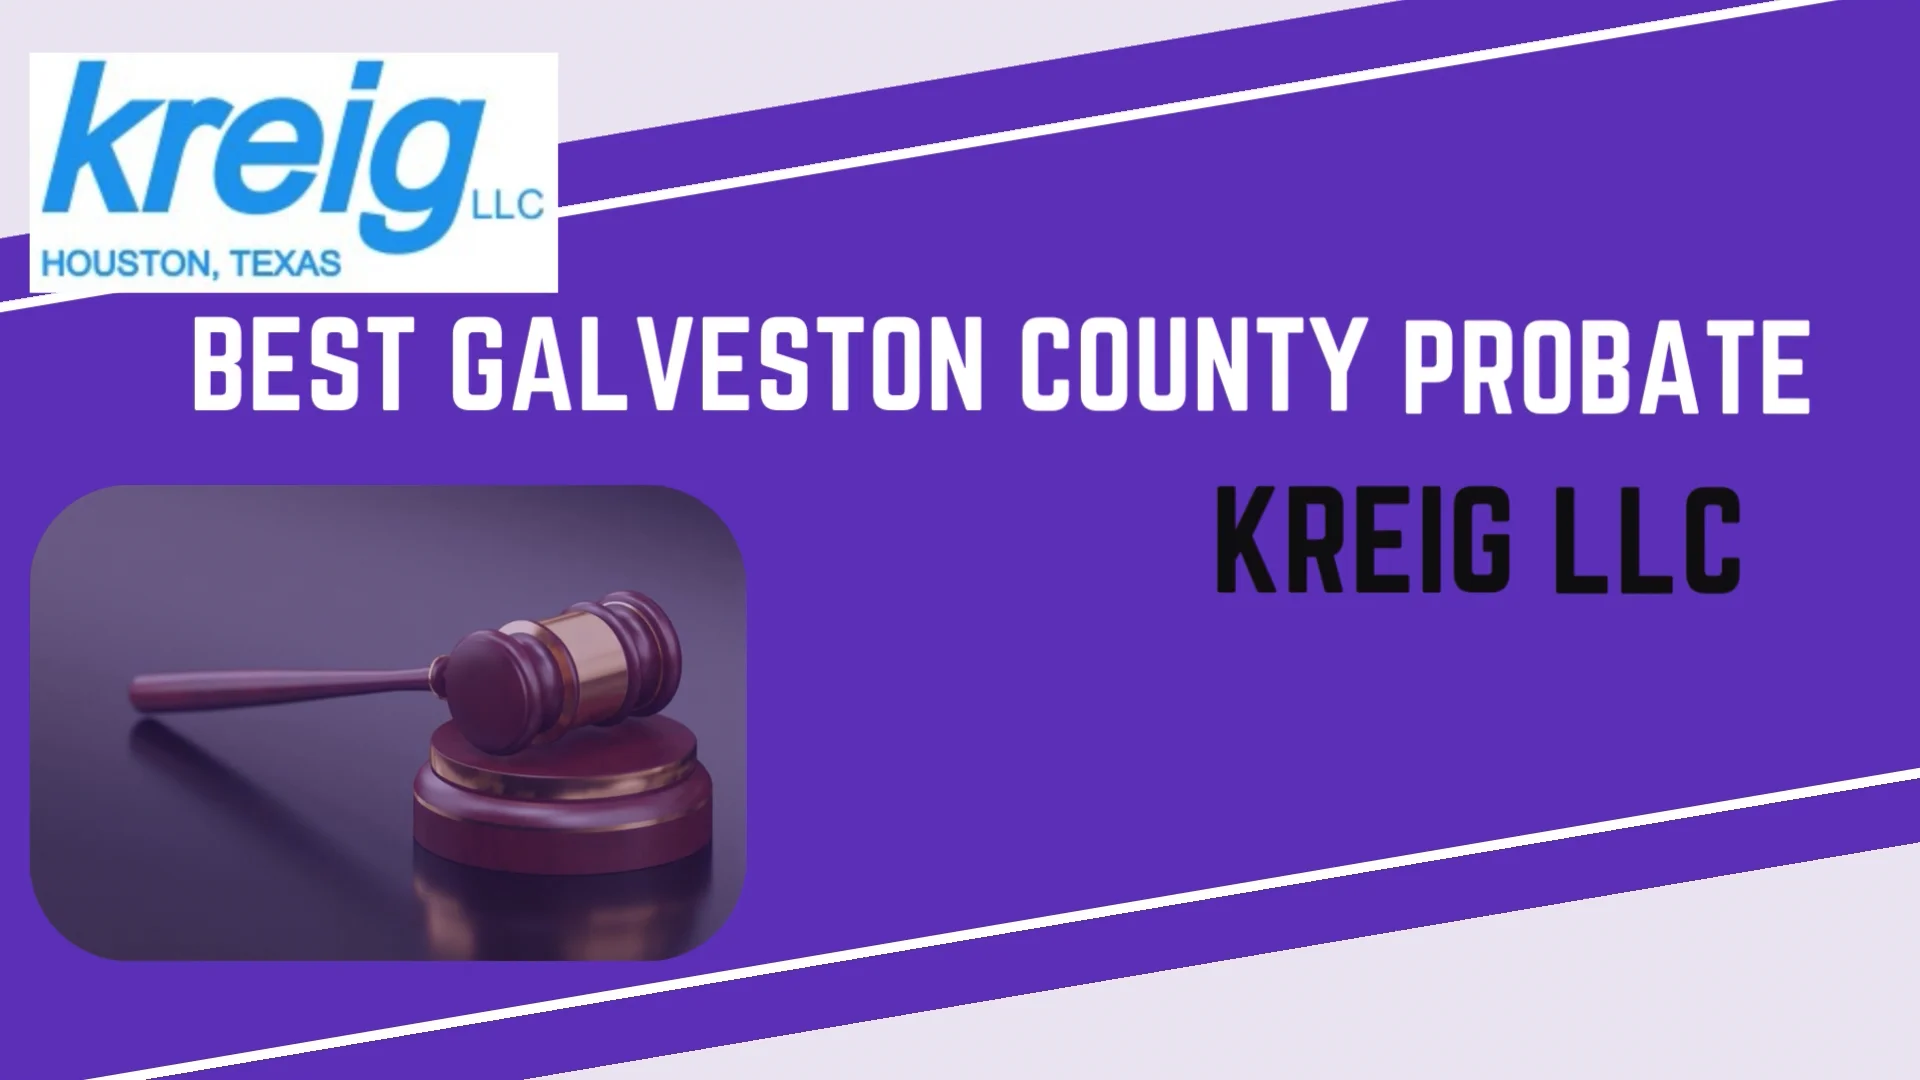 Best Galveston County Probate - Kreig LLC on Vimeo